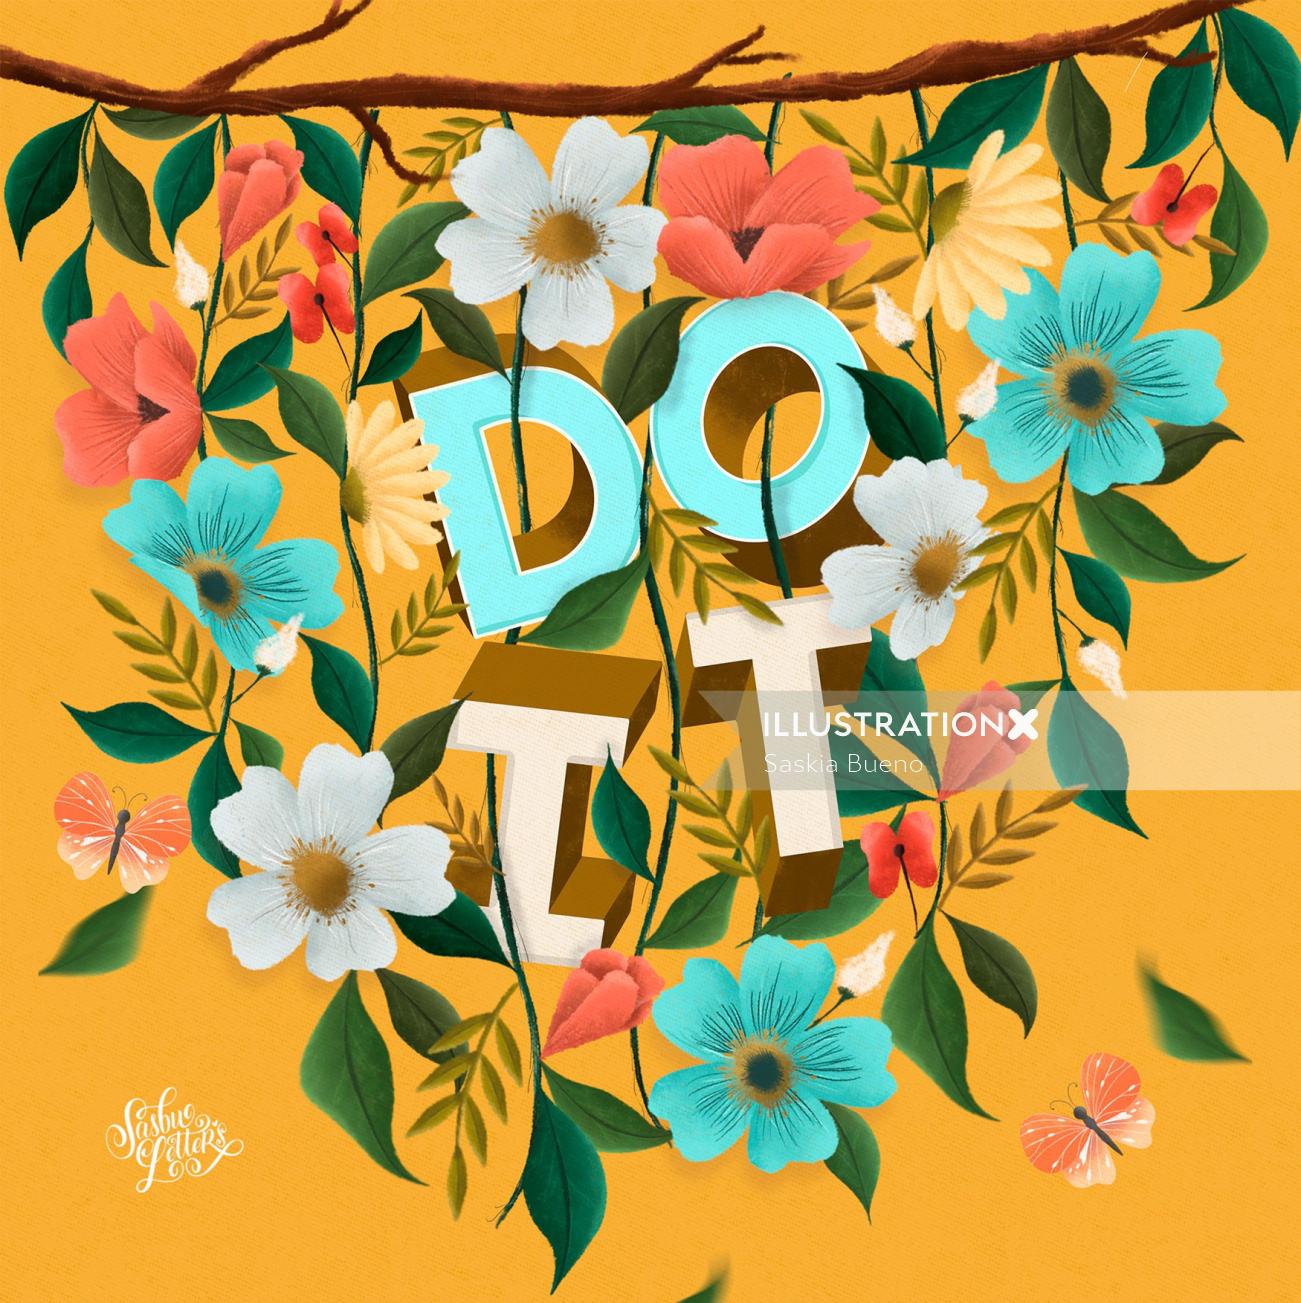 Inspiration typography art of Do It 